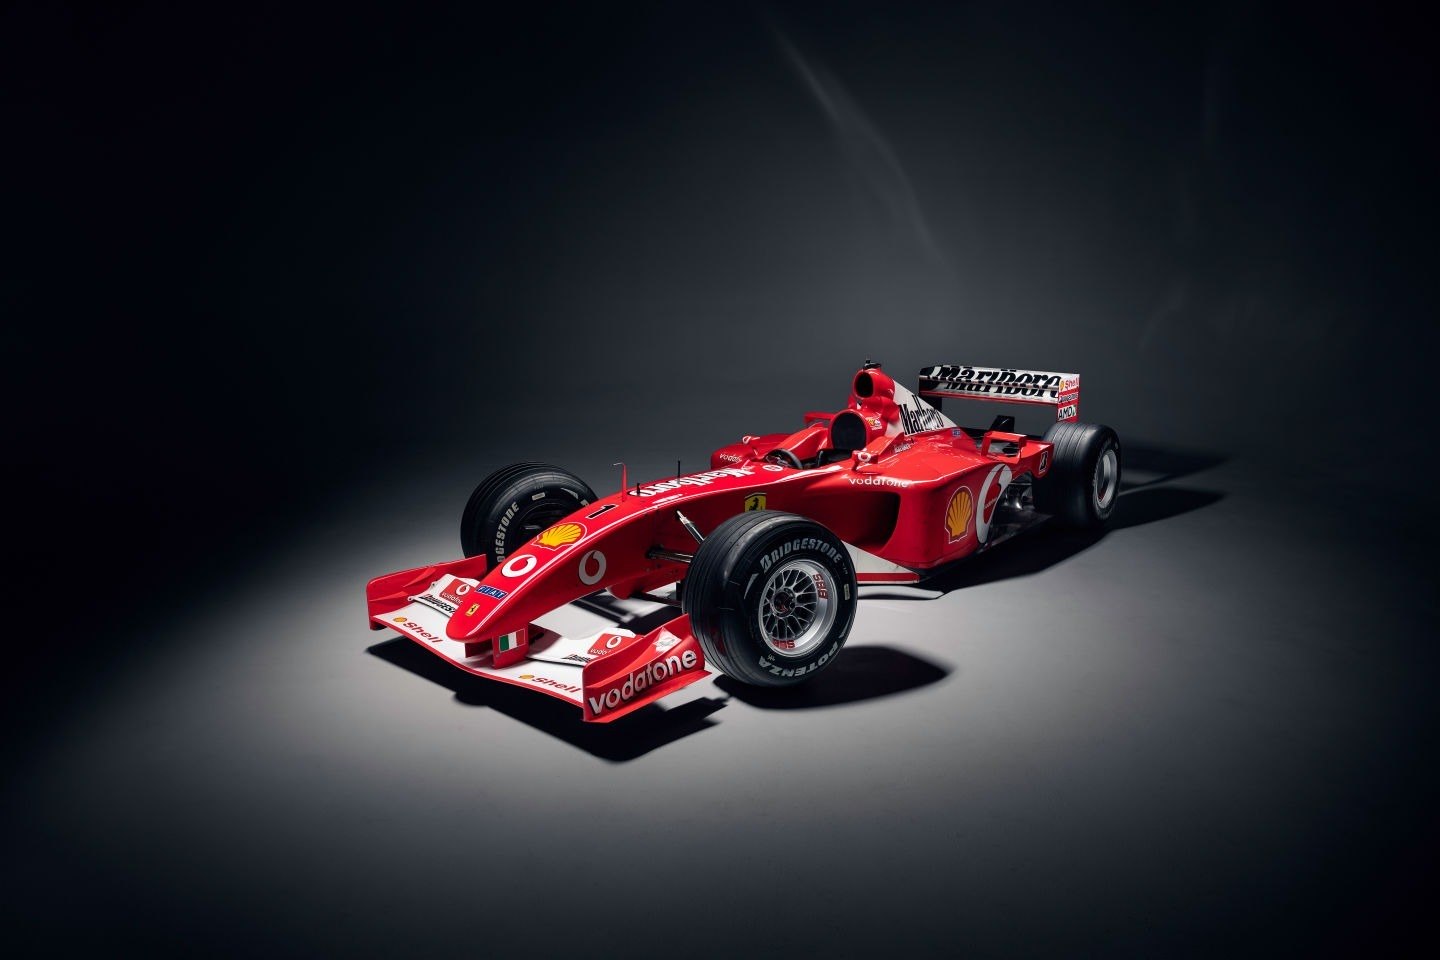 Senna, Hamilton e Schumacher 5 carros mais caros da F1 vendidos